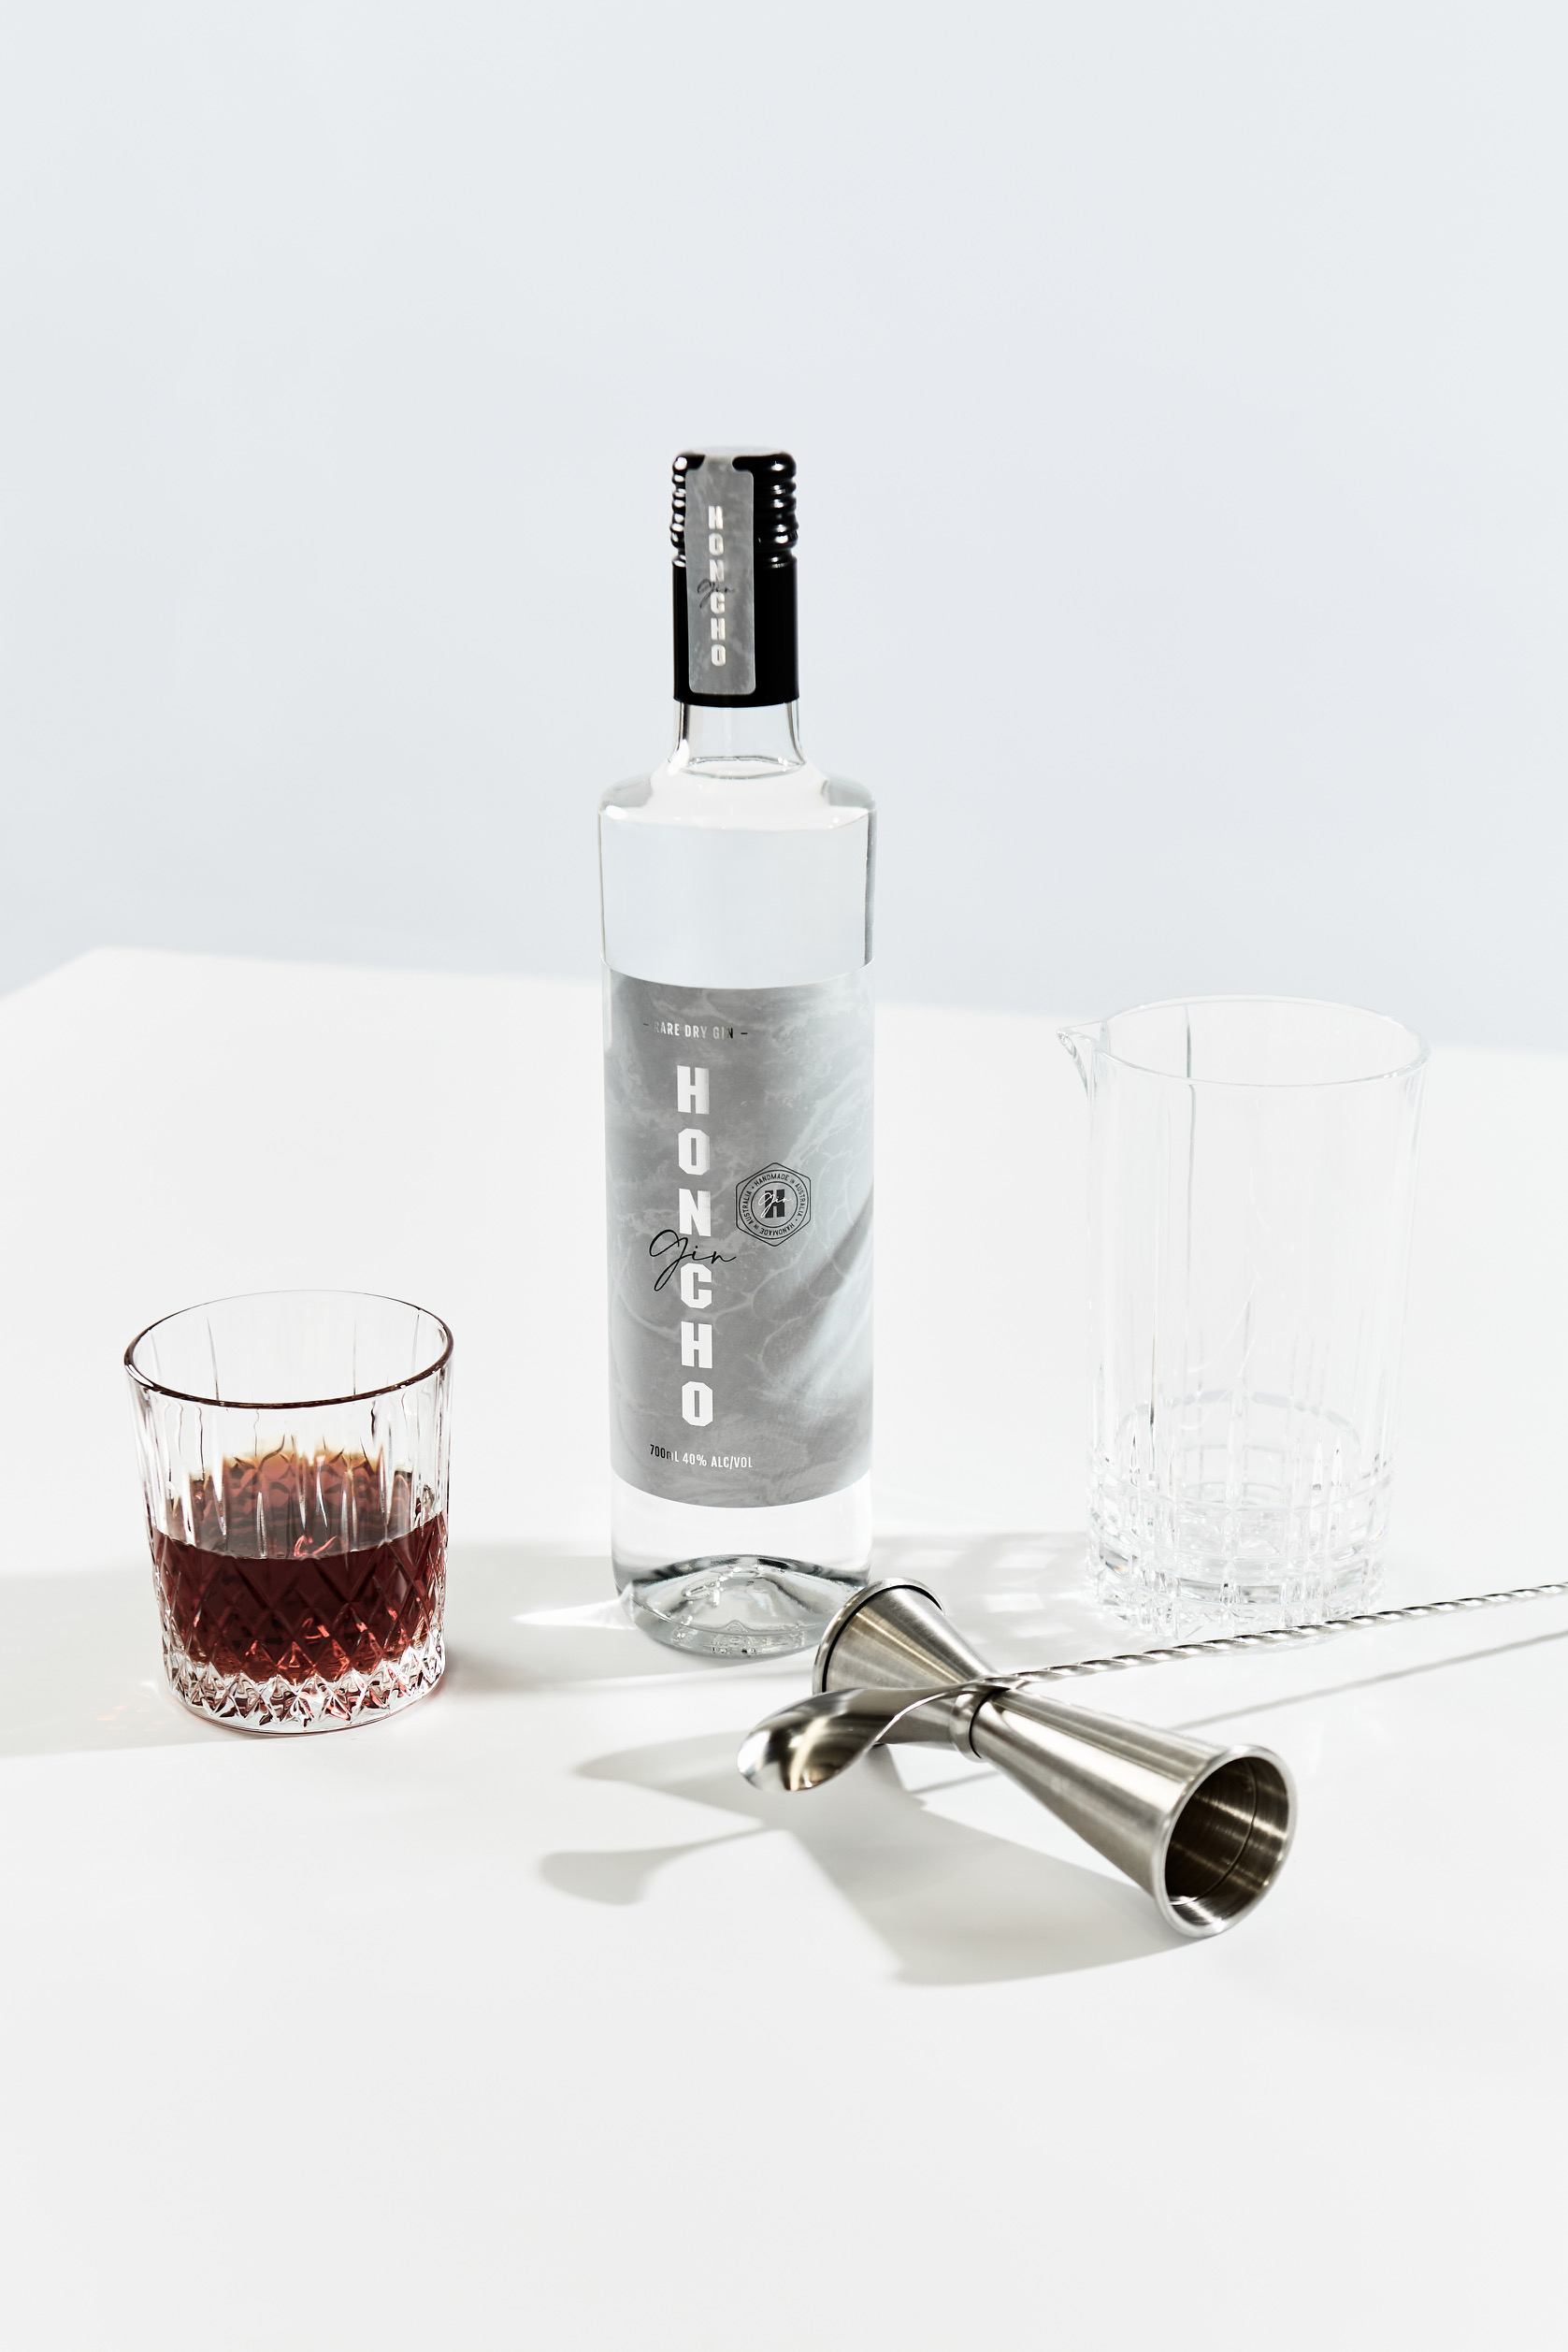 Honcho Gin - Premium hand crafted gin